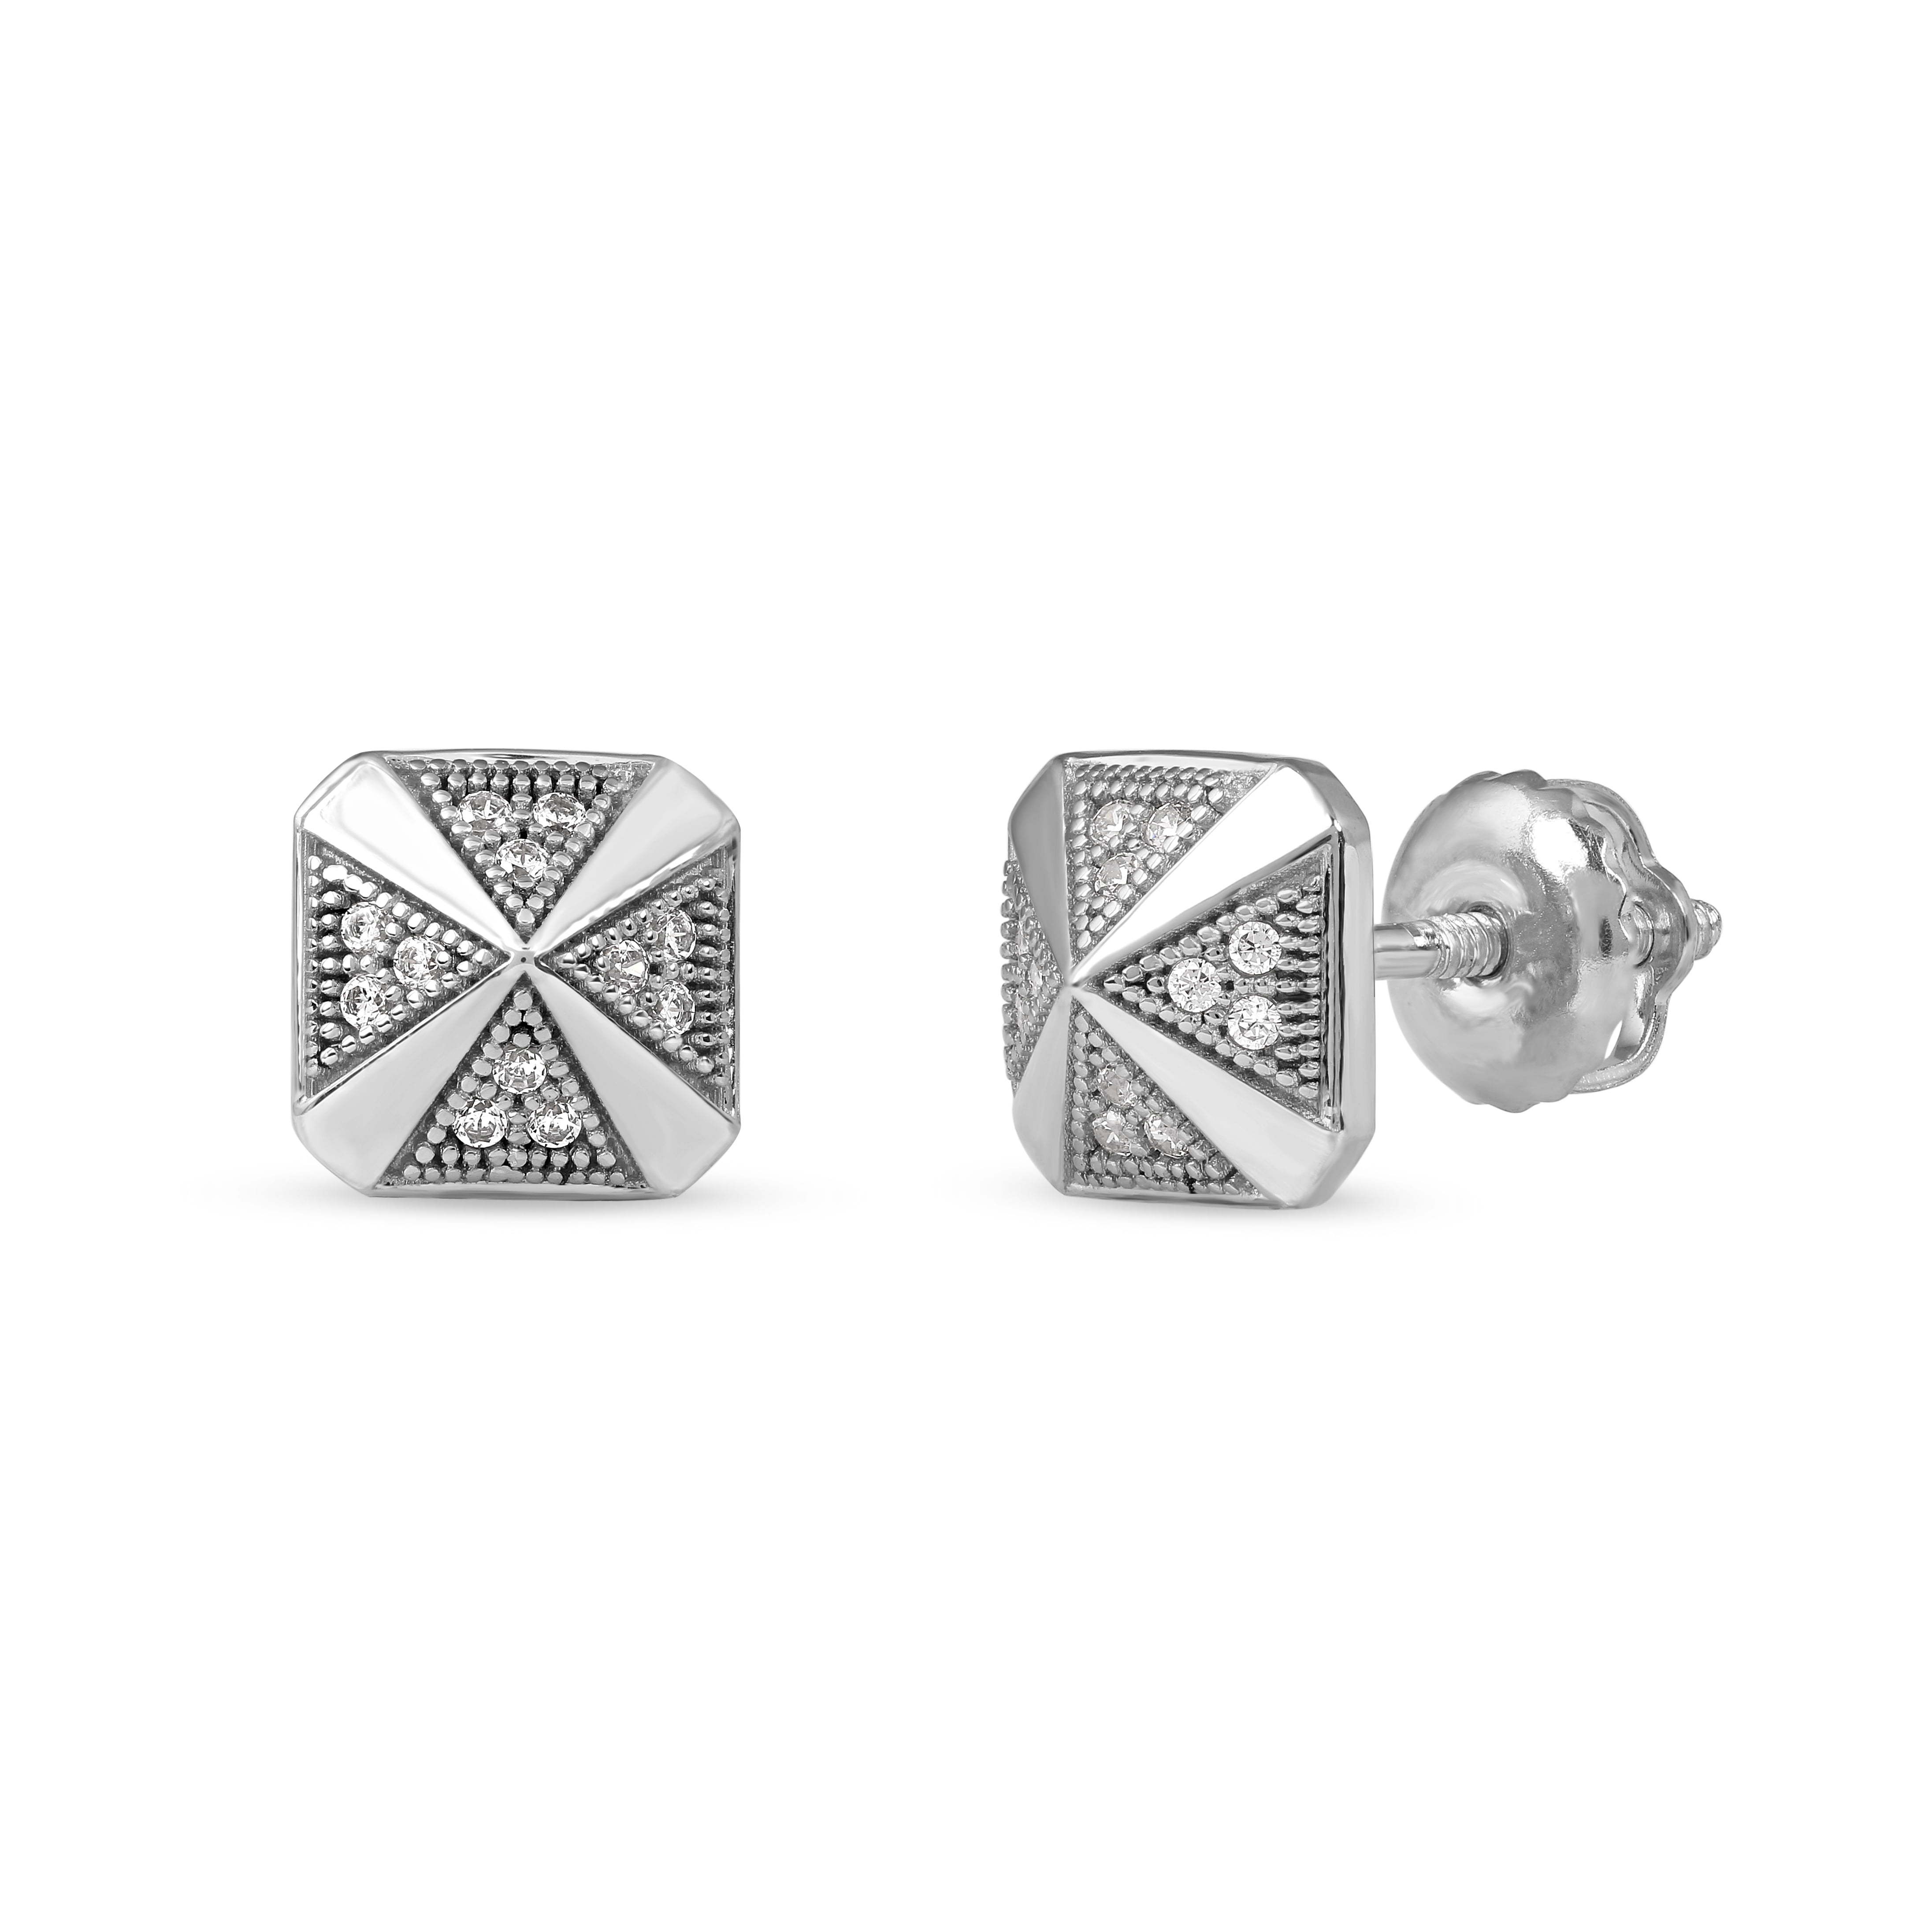 Discover more than 196 diamond stud earrings for men best